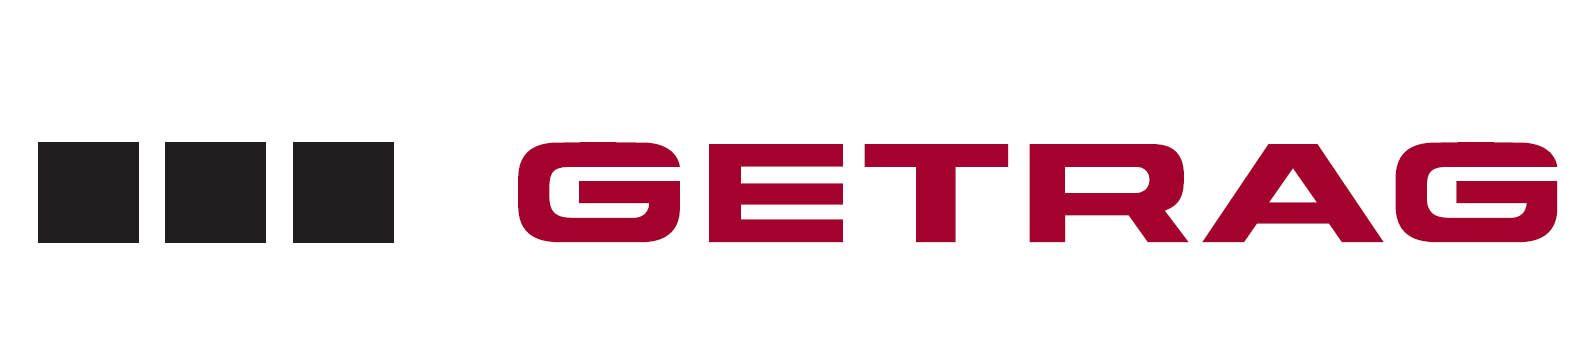 Getrag Logo - Armoric Automation - Réalisations